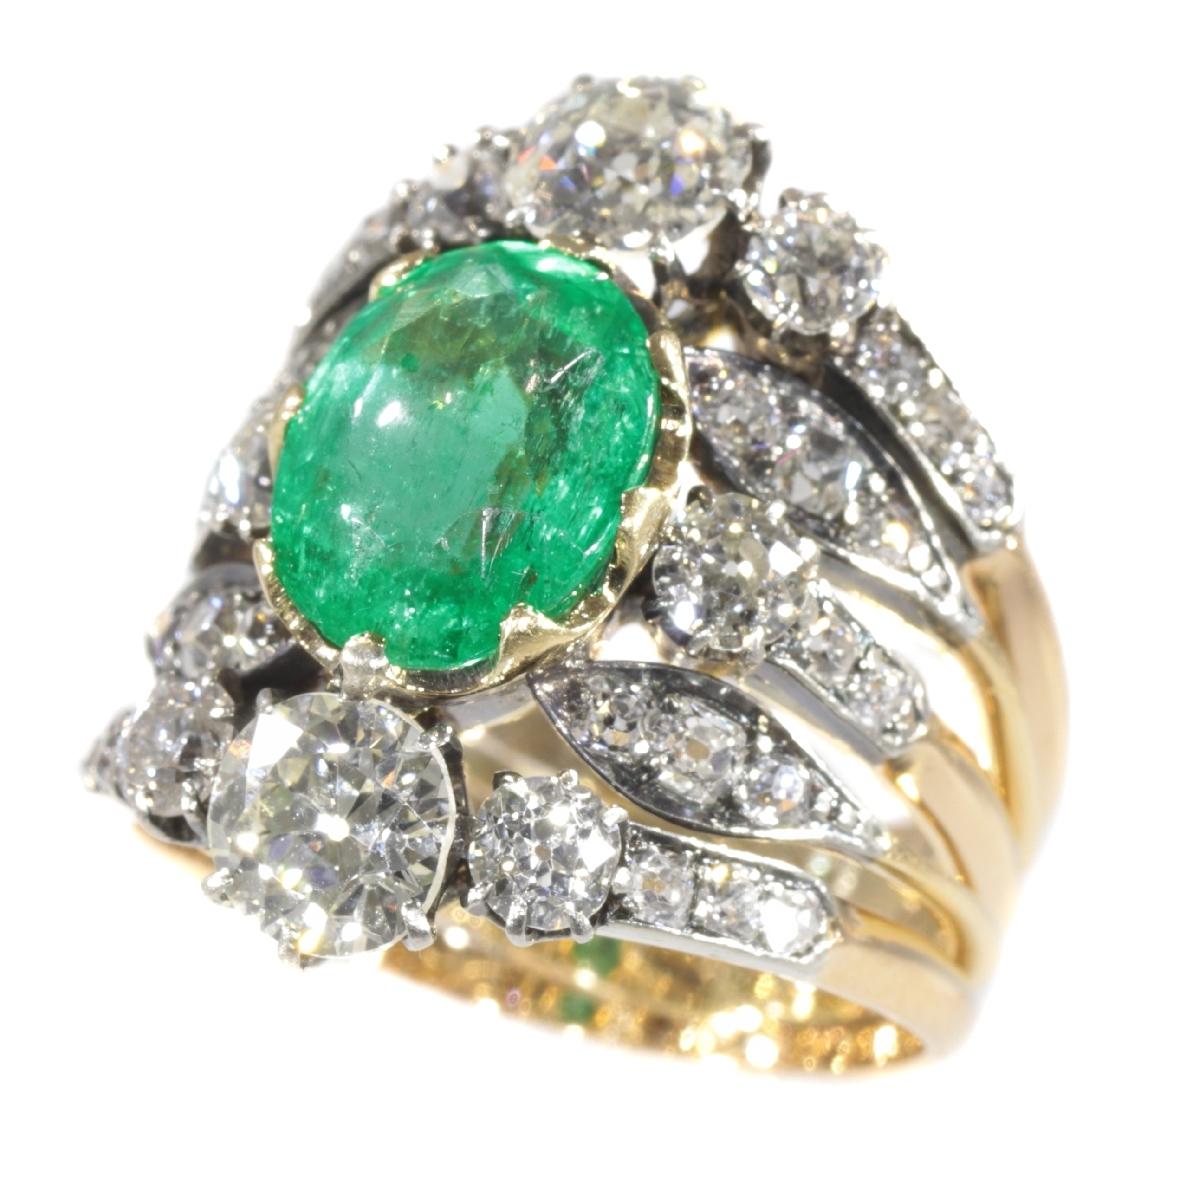 True Eyecatcher Victorian Antique Ring with a 3.50 Carat Ovalcut Emerald 8